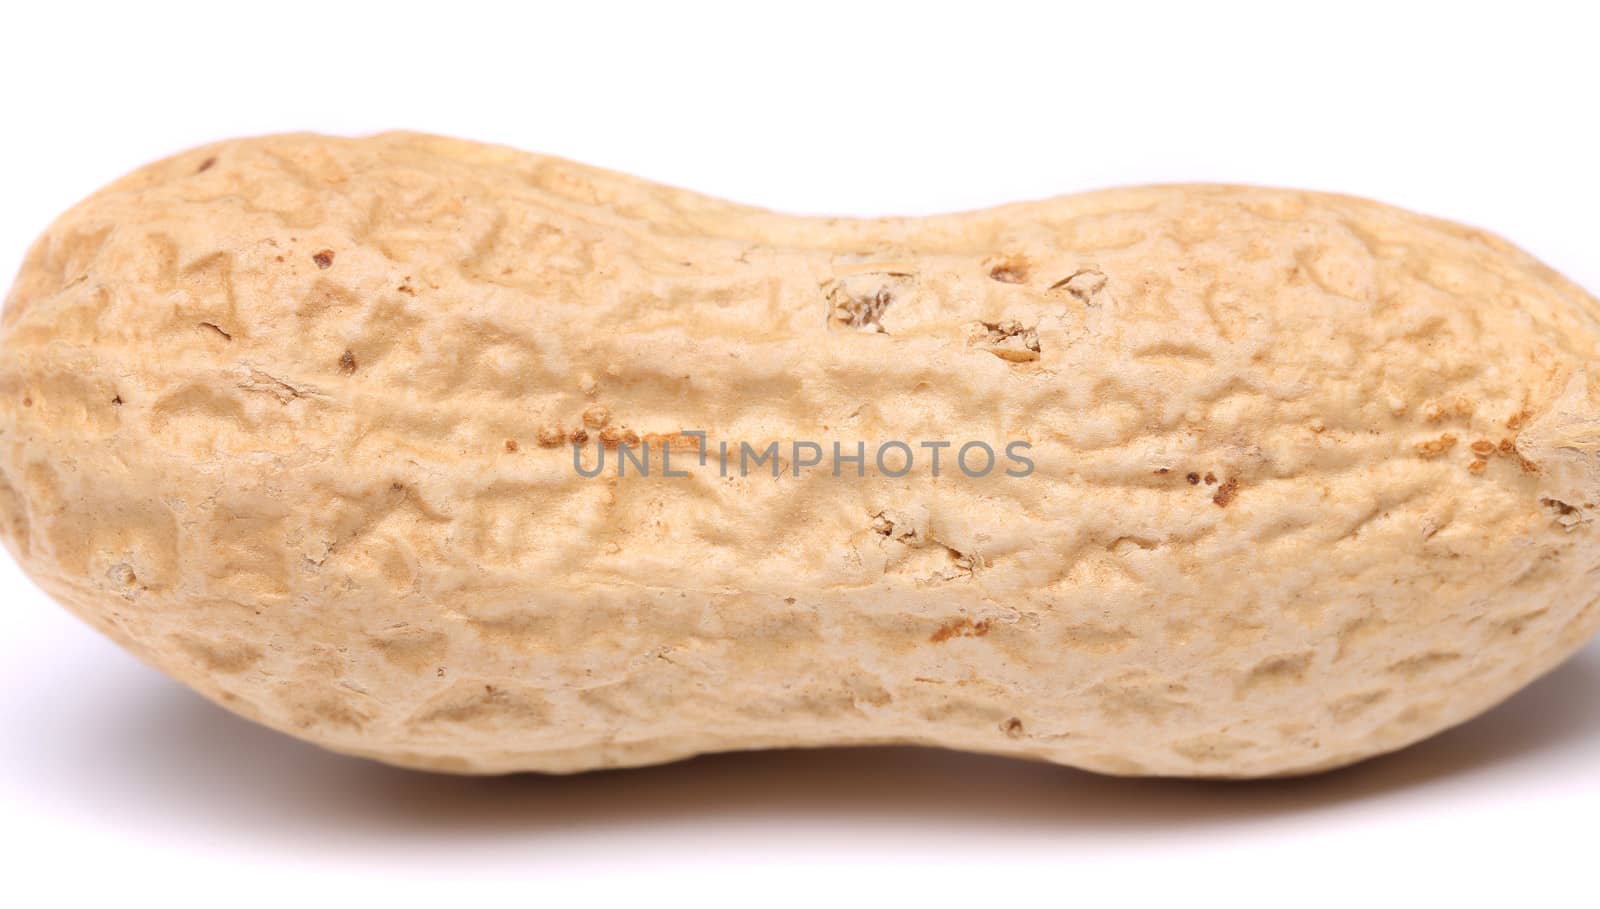 A light pod of peanuts by indigolotos